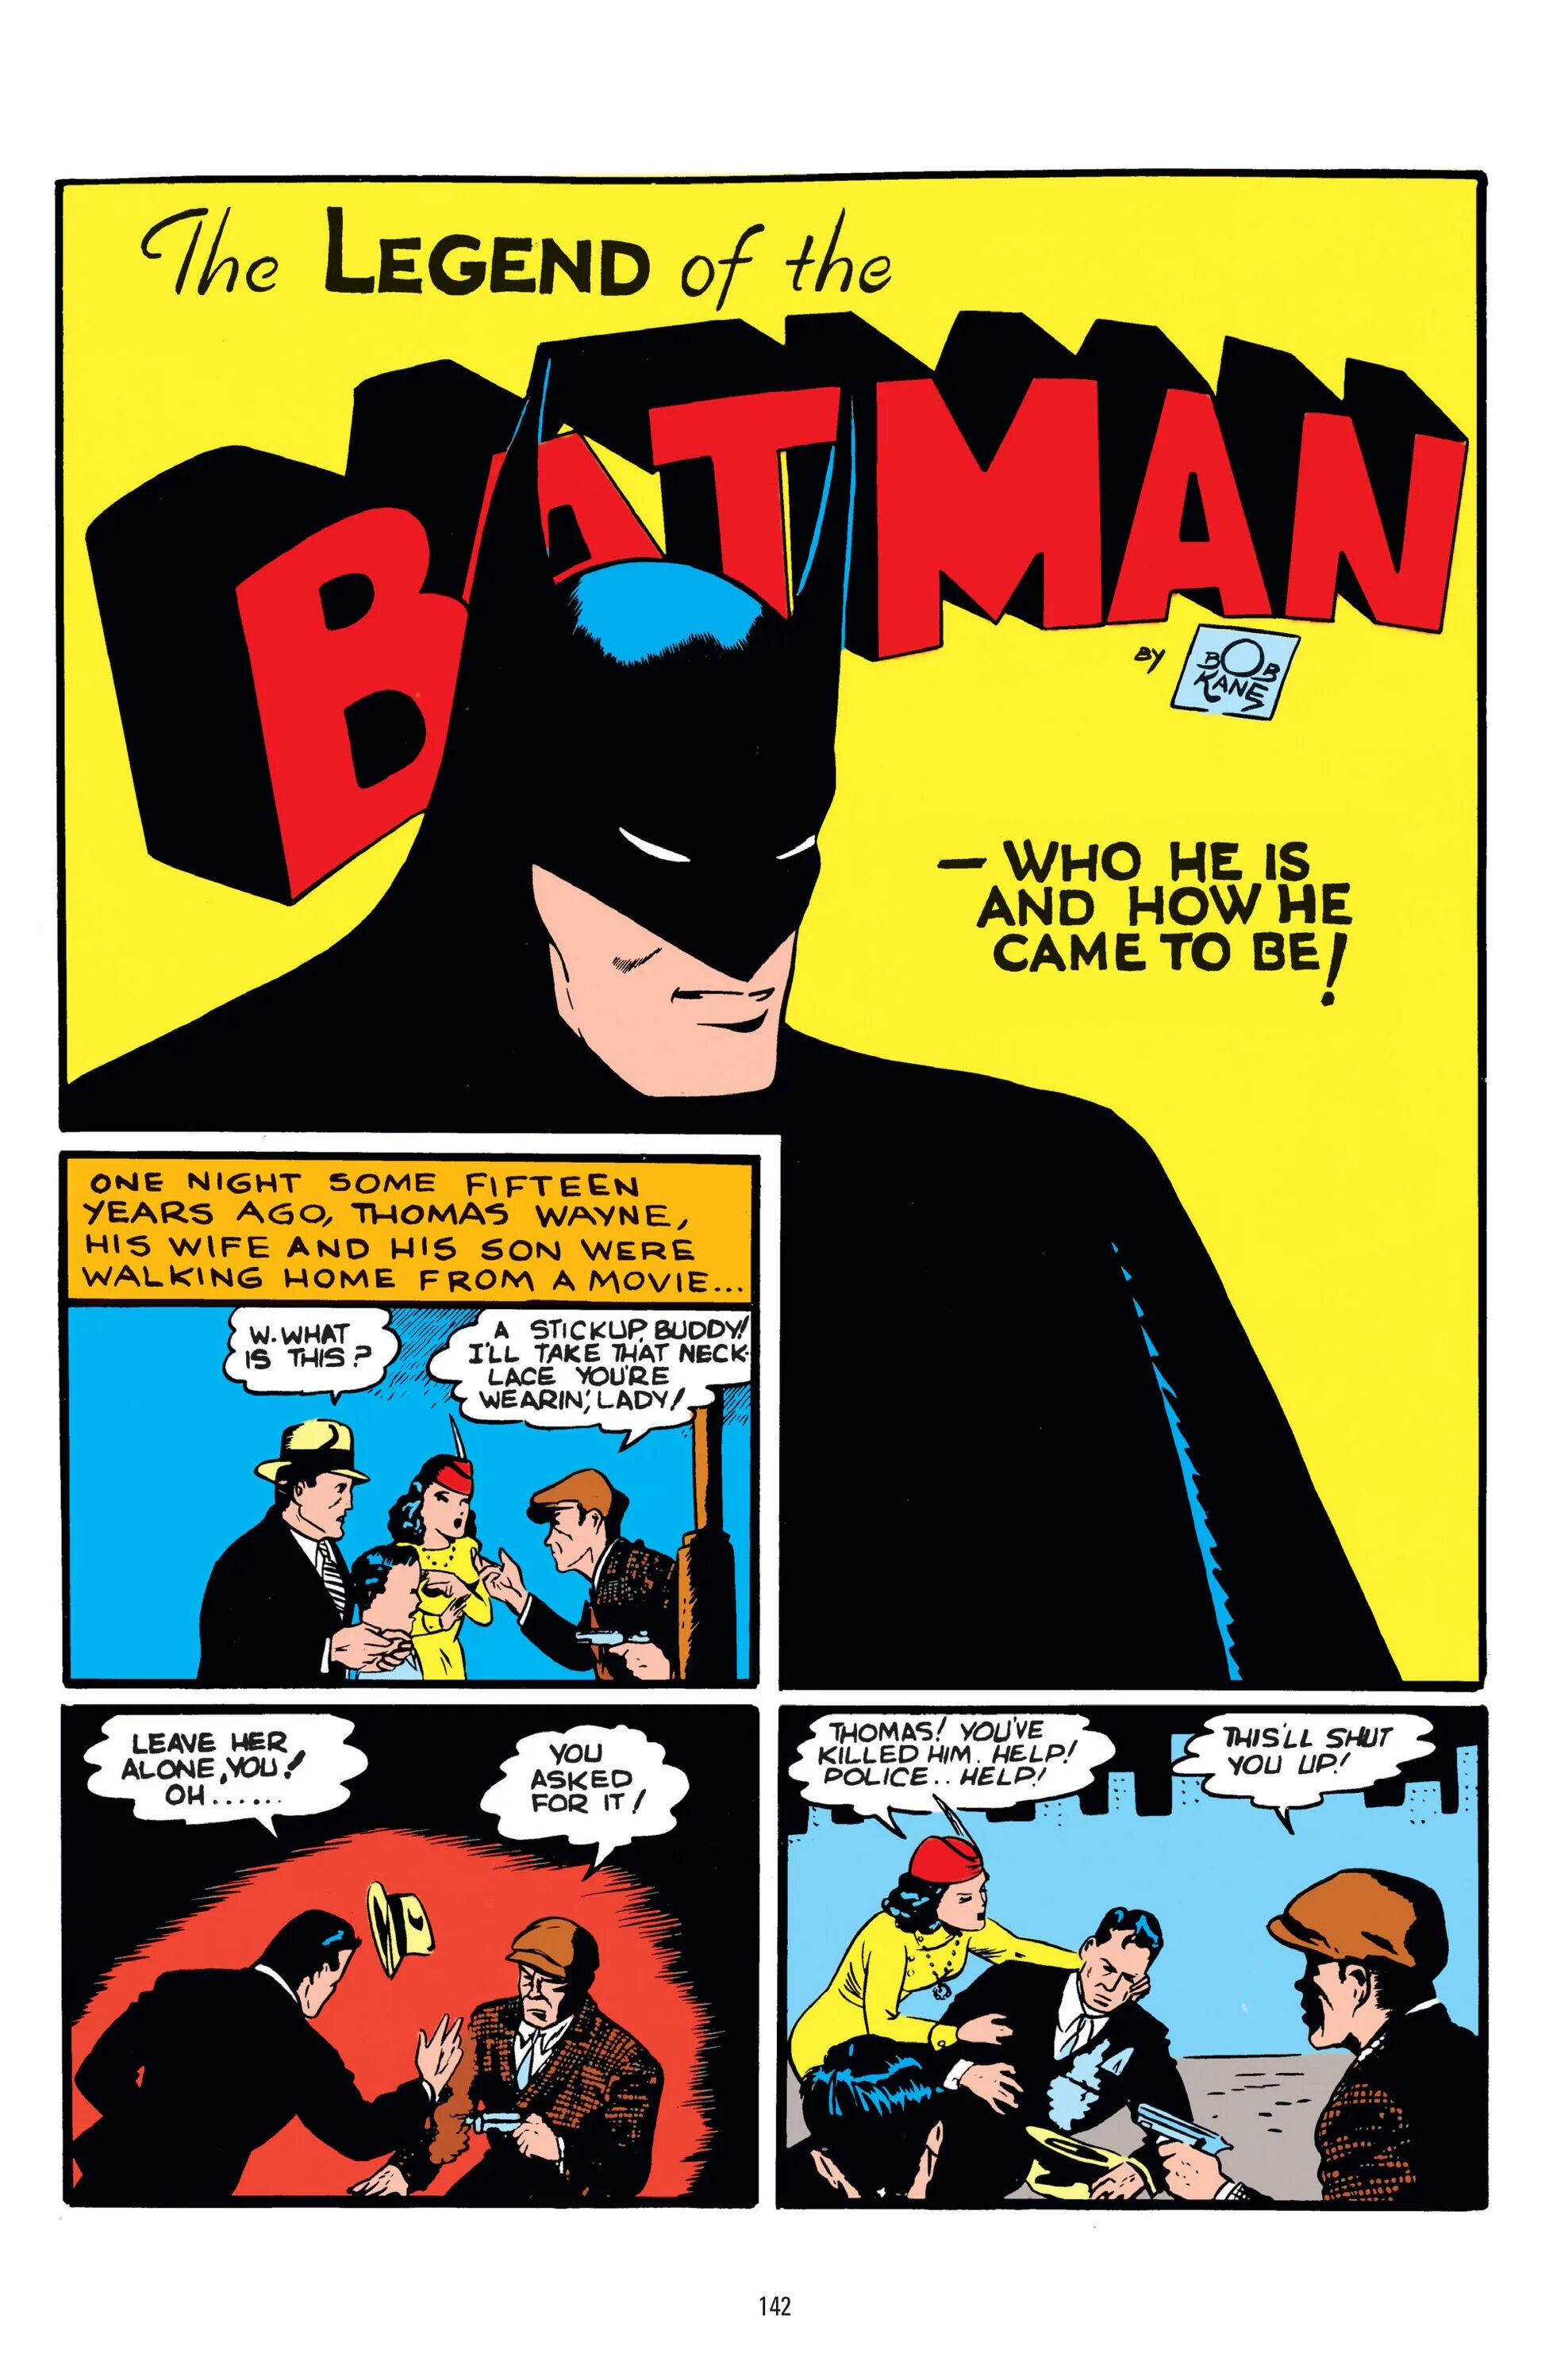 Первый комикс про Бэтмена. Бэтмен первый комикс. Самый первый комикс про Бэтмена. Бэтмен 1940.